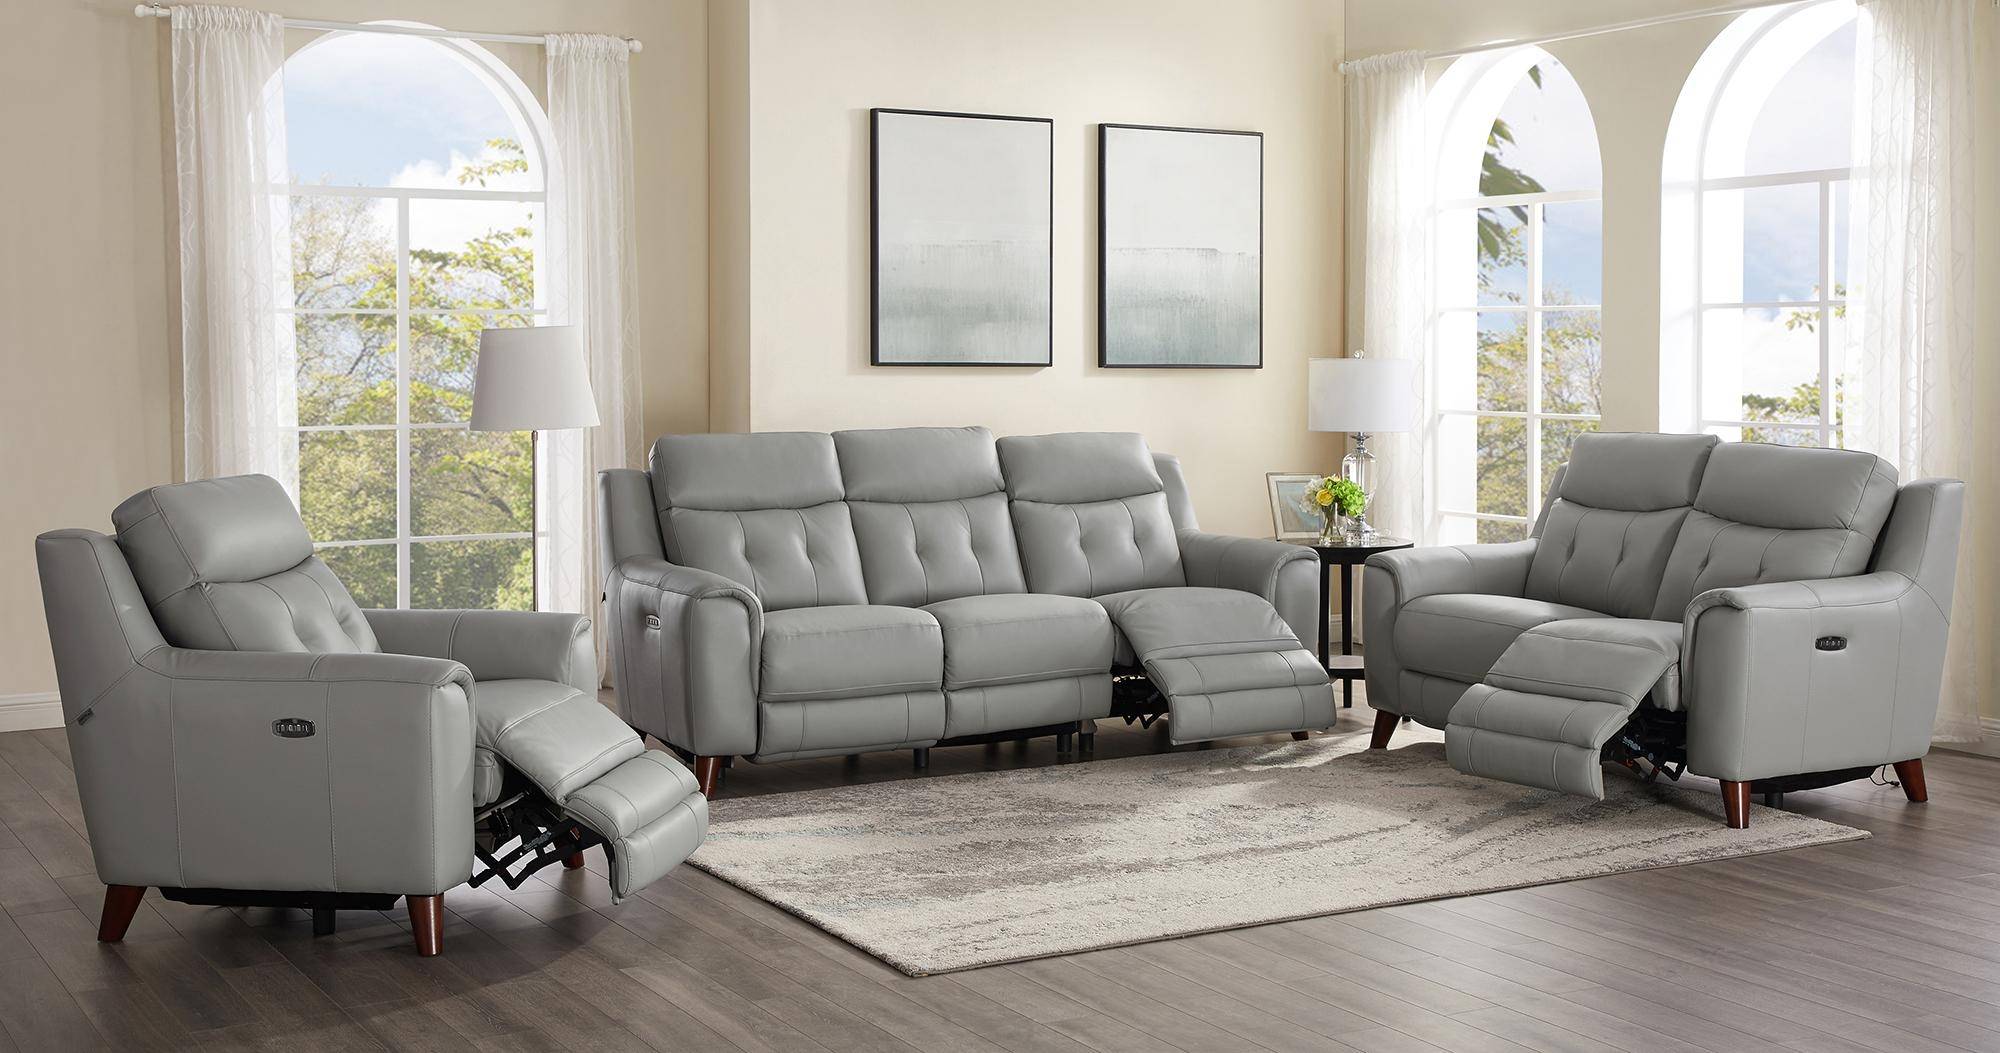 gray leather recliner sofa set